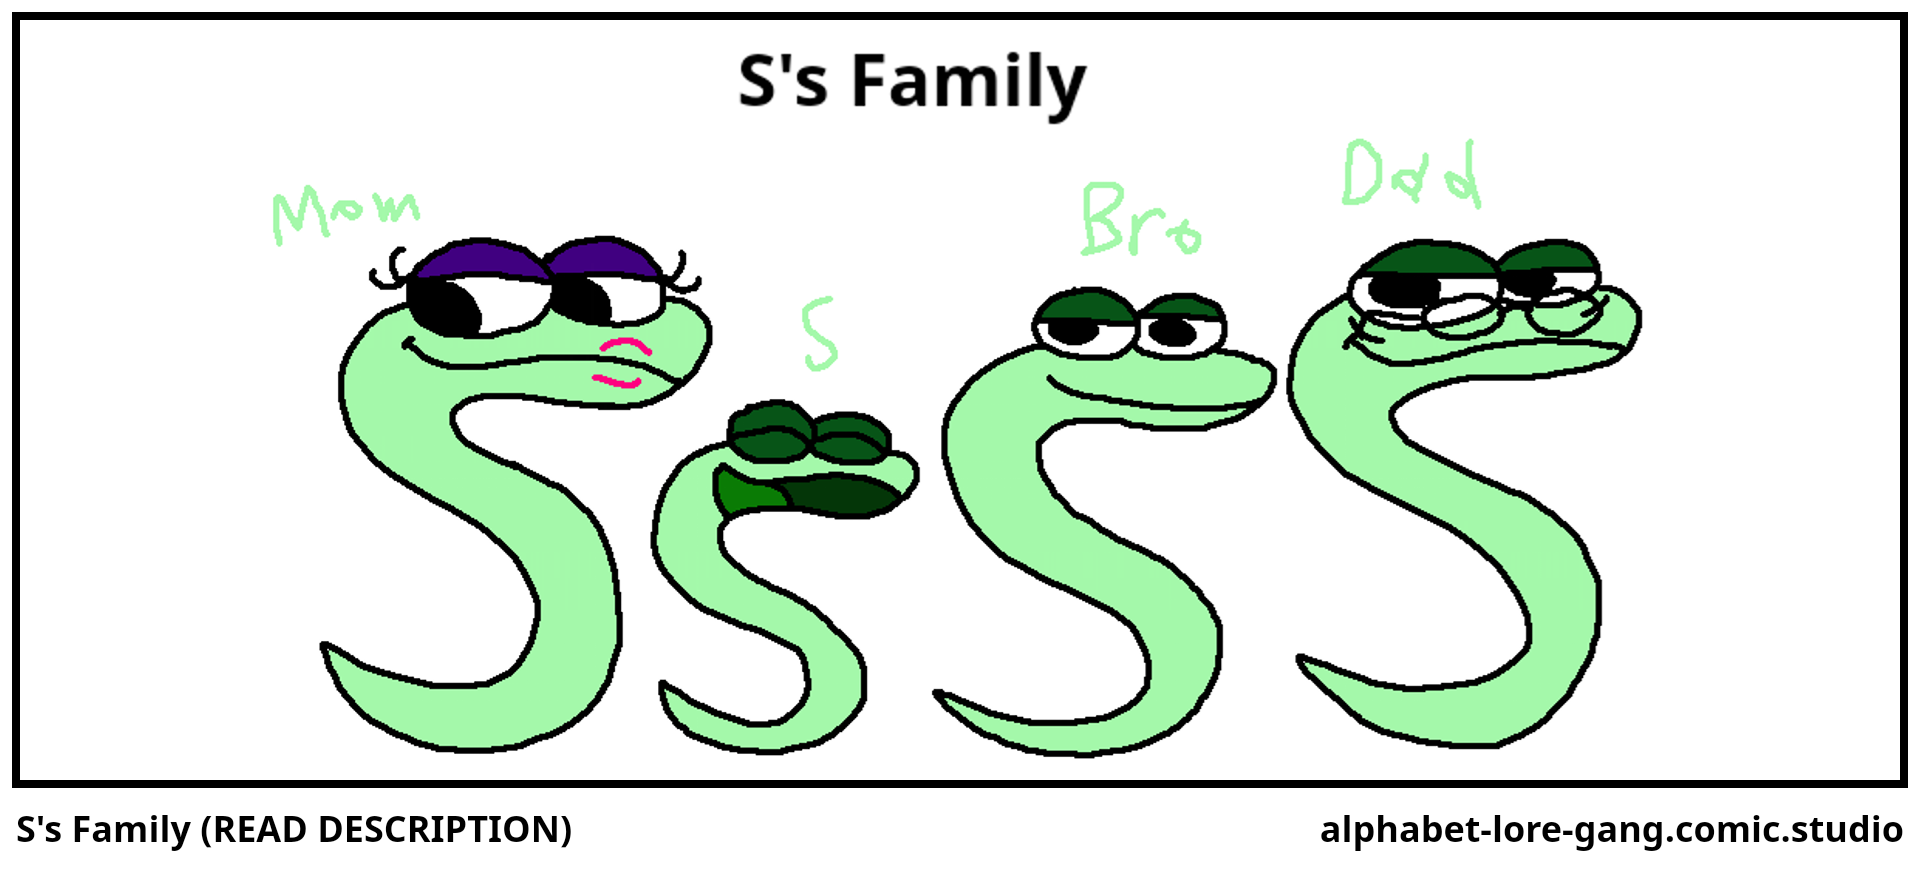 S's Family (READ DESCRIPTION)